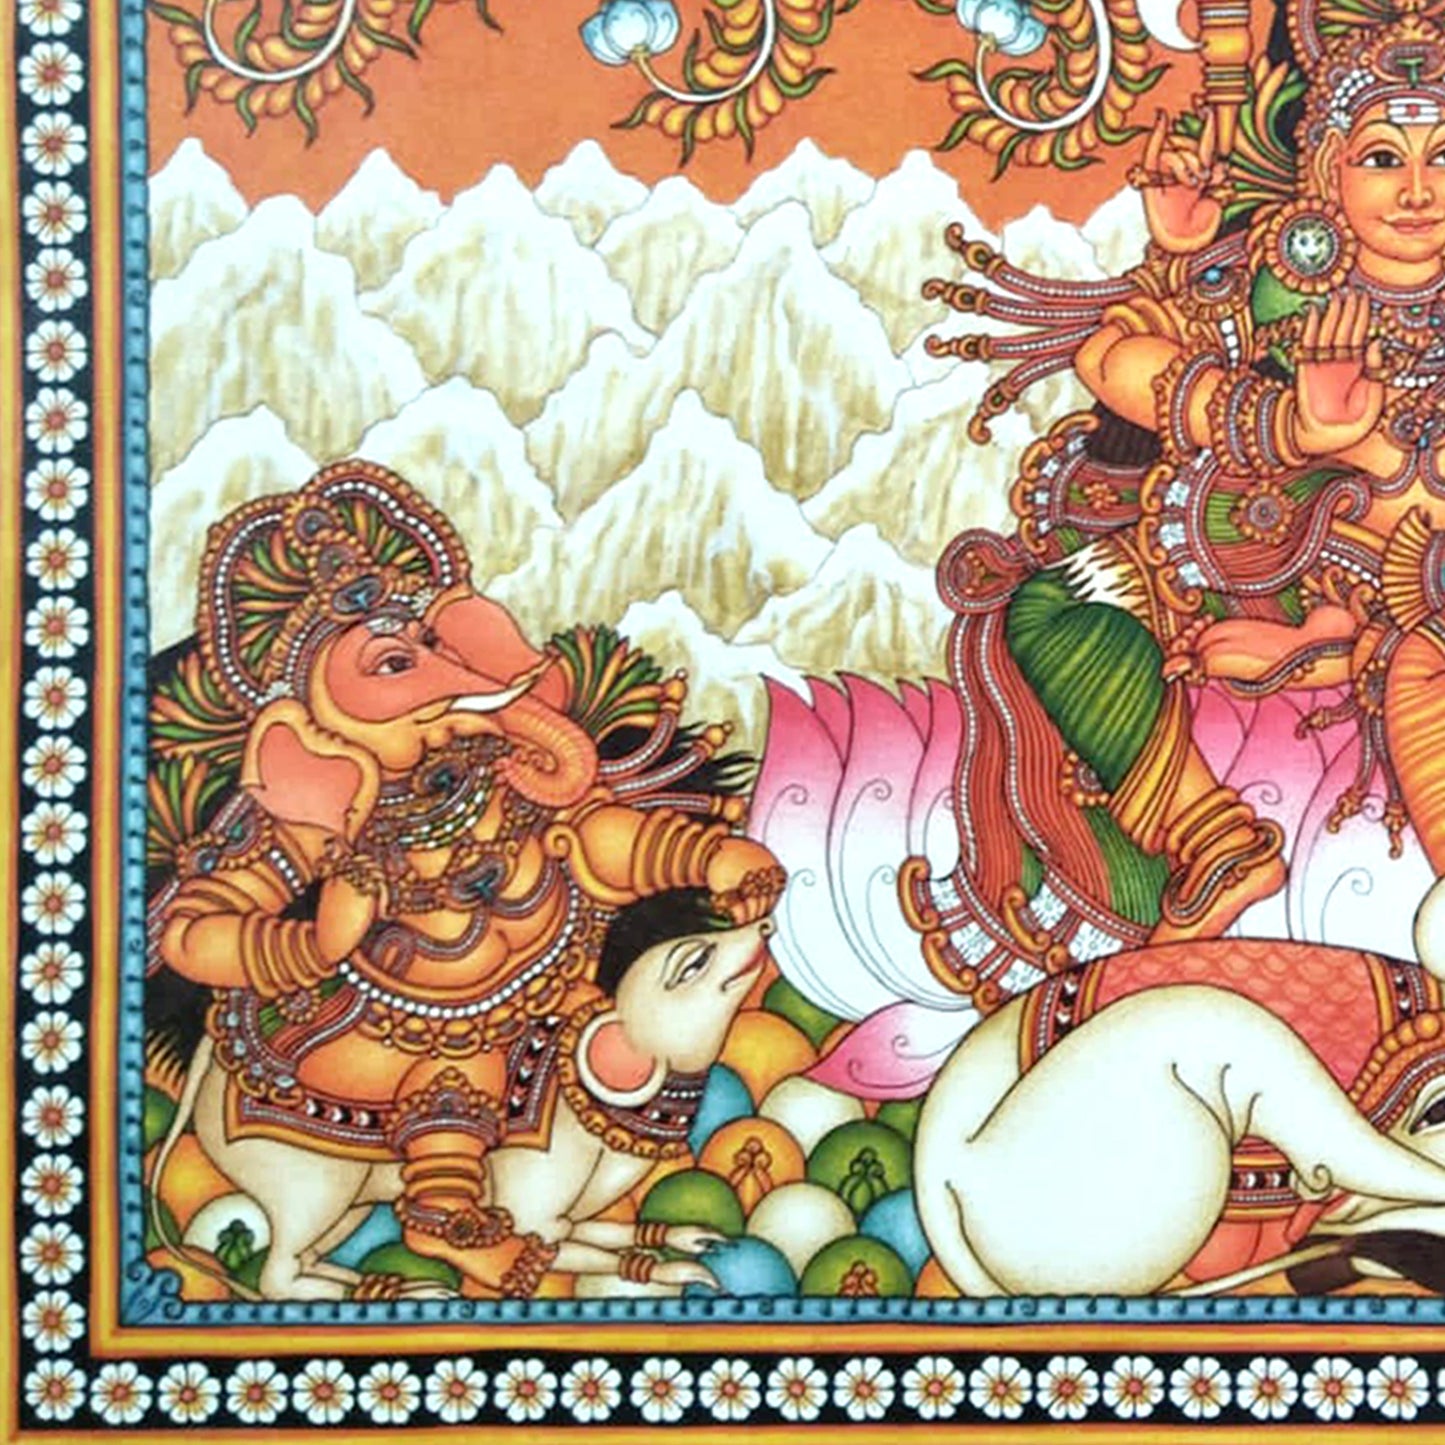 Kerala Mural Painting portraying The Shiva Kudumbam, rich in mythological imagery